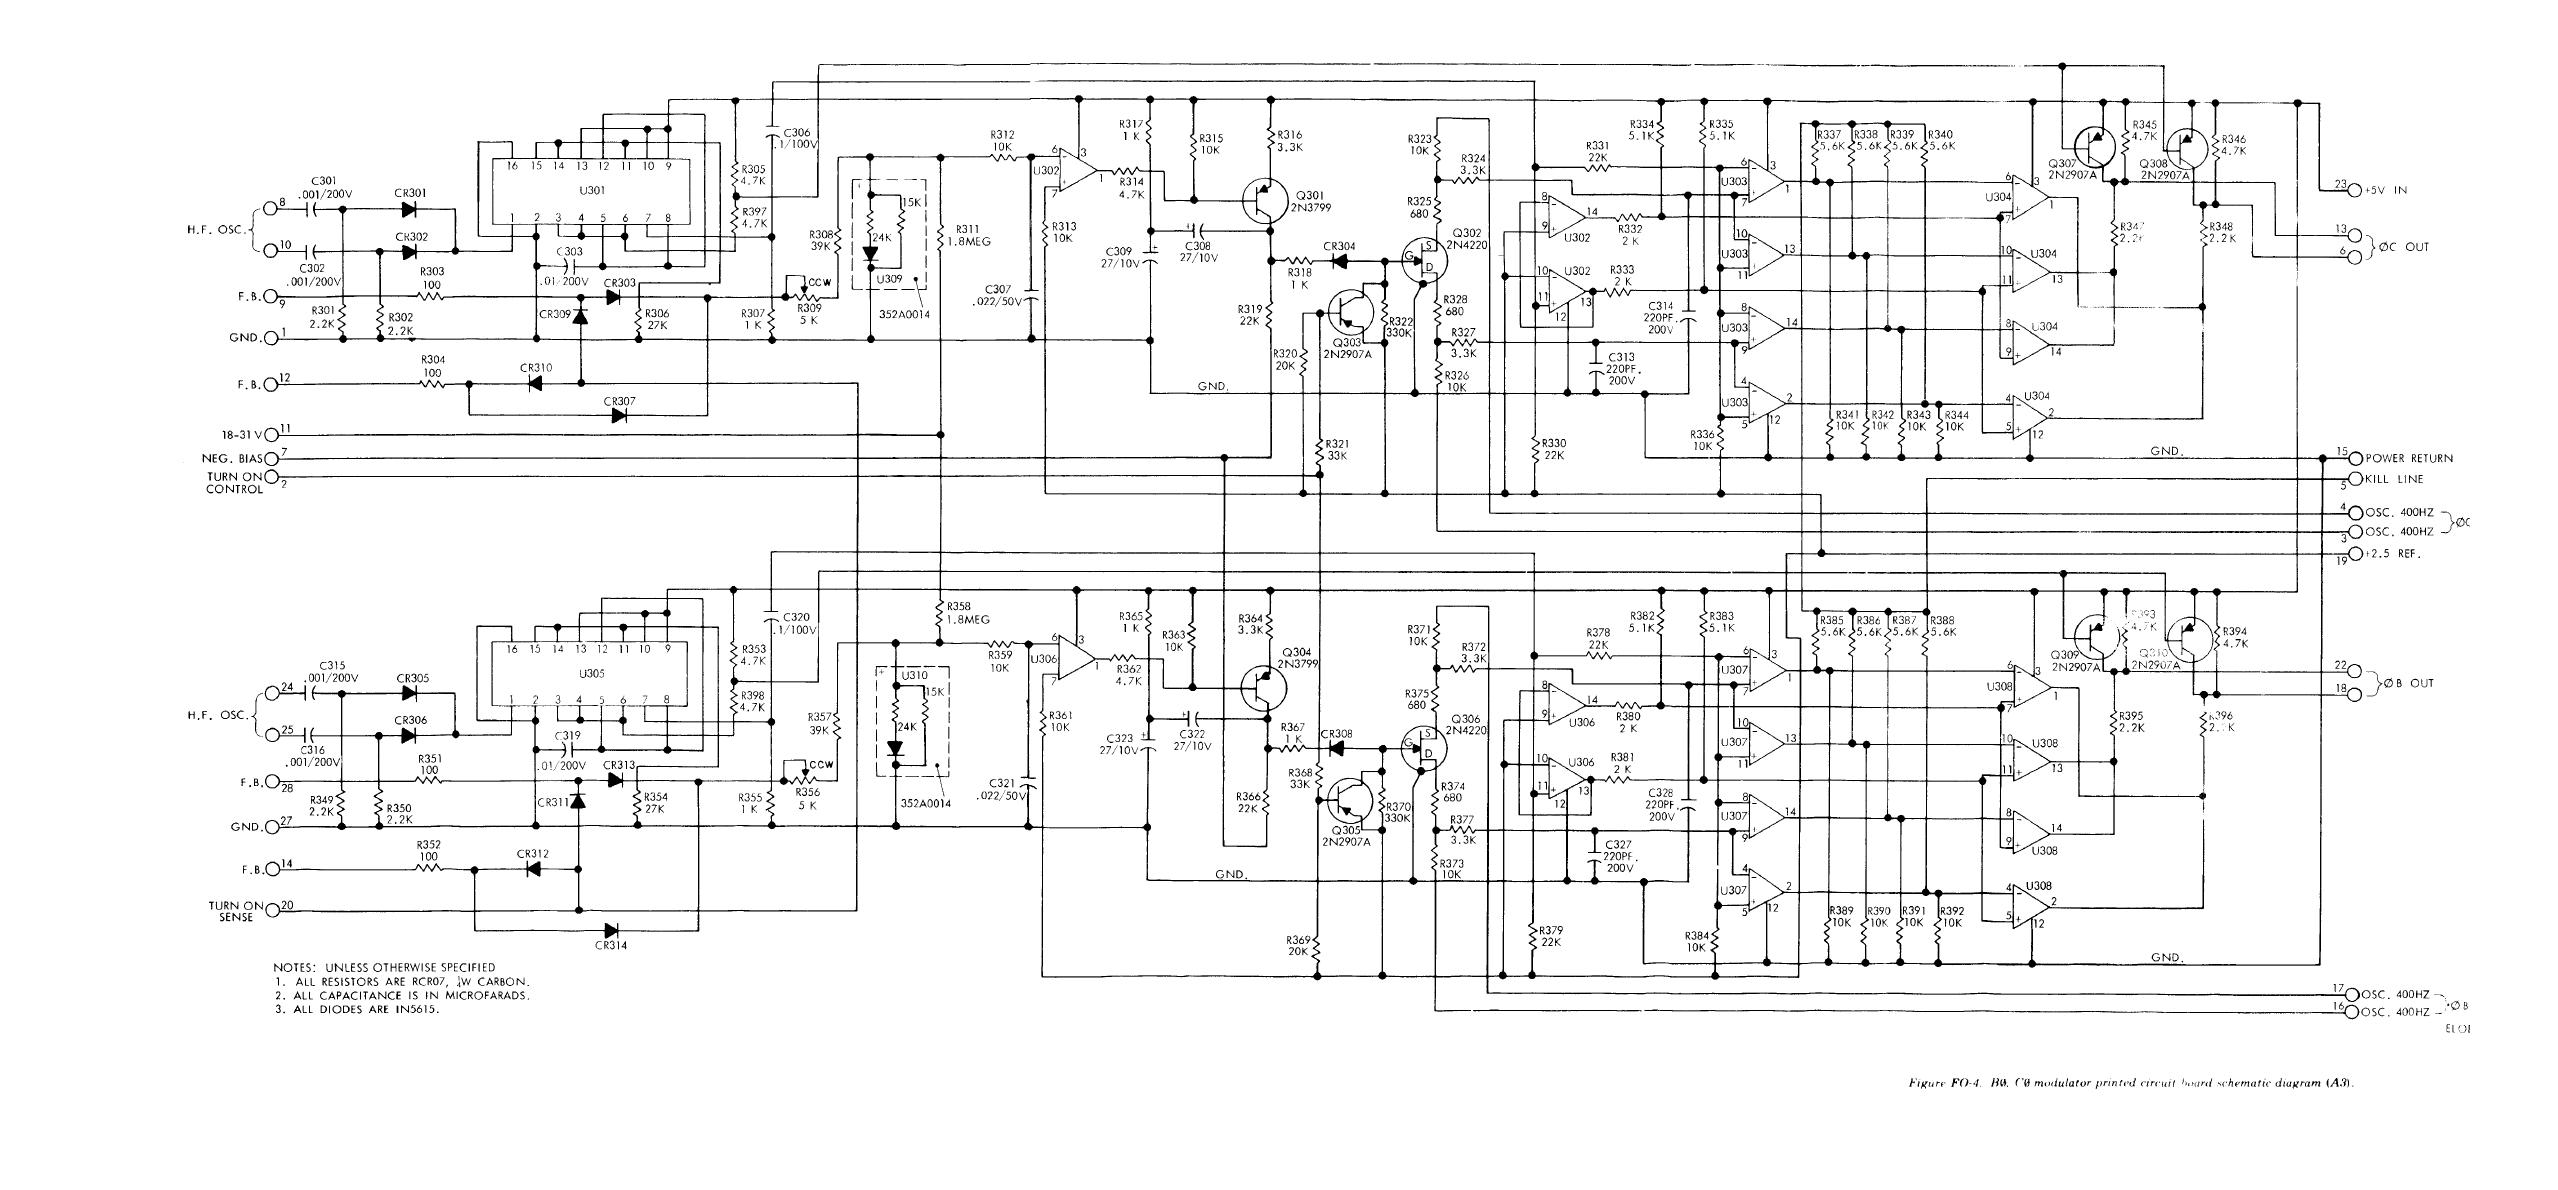 Figure FO-4. B modulator and current sense printed circuit board